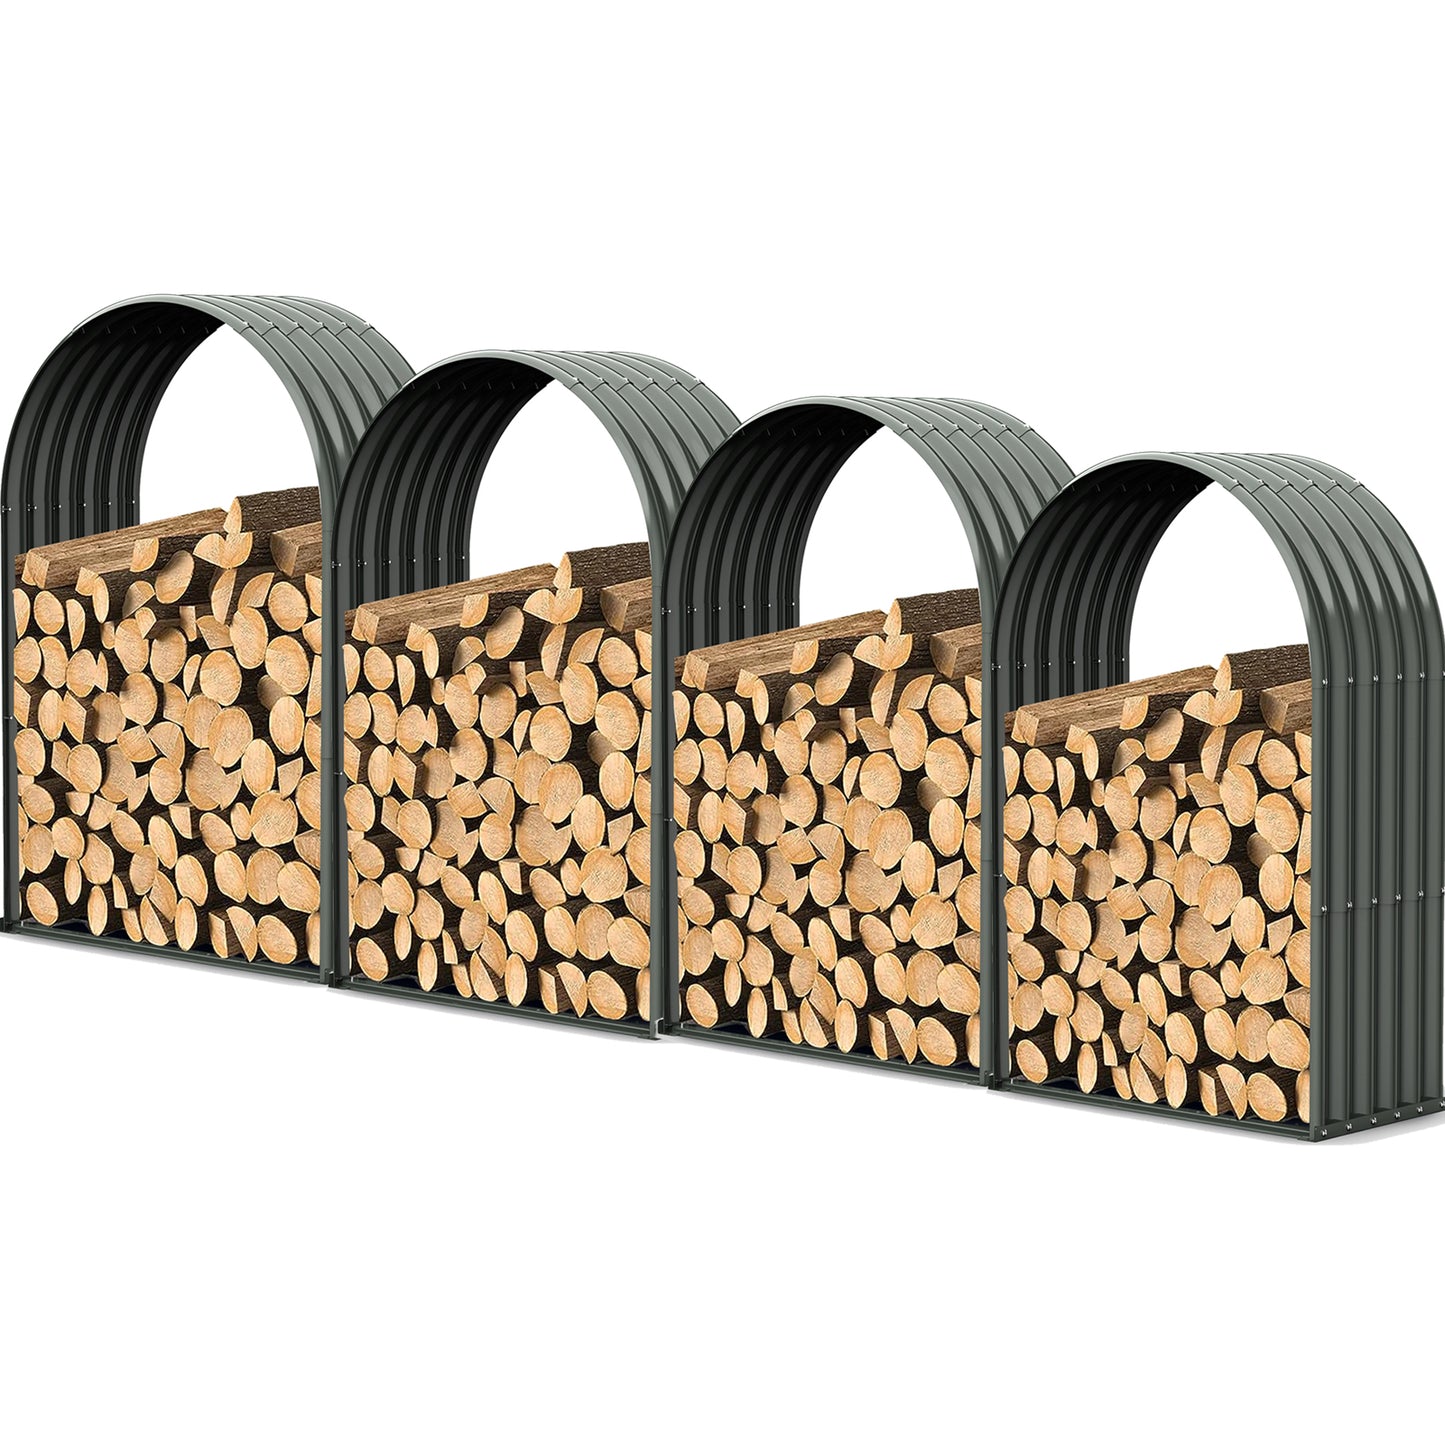 Set of 4: 20.25cube feet,18"D x 36"W x 54"H,Galvanized Steel Firewood Storage Shed, Metal Log Rack